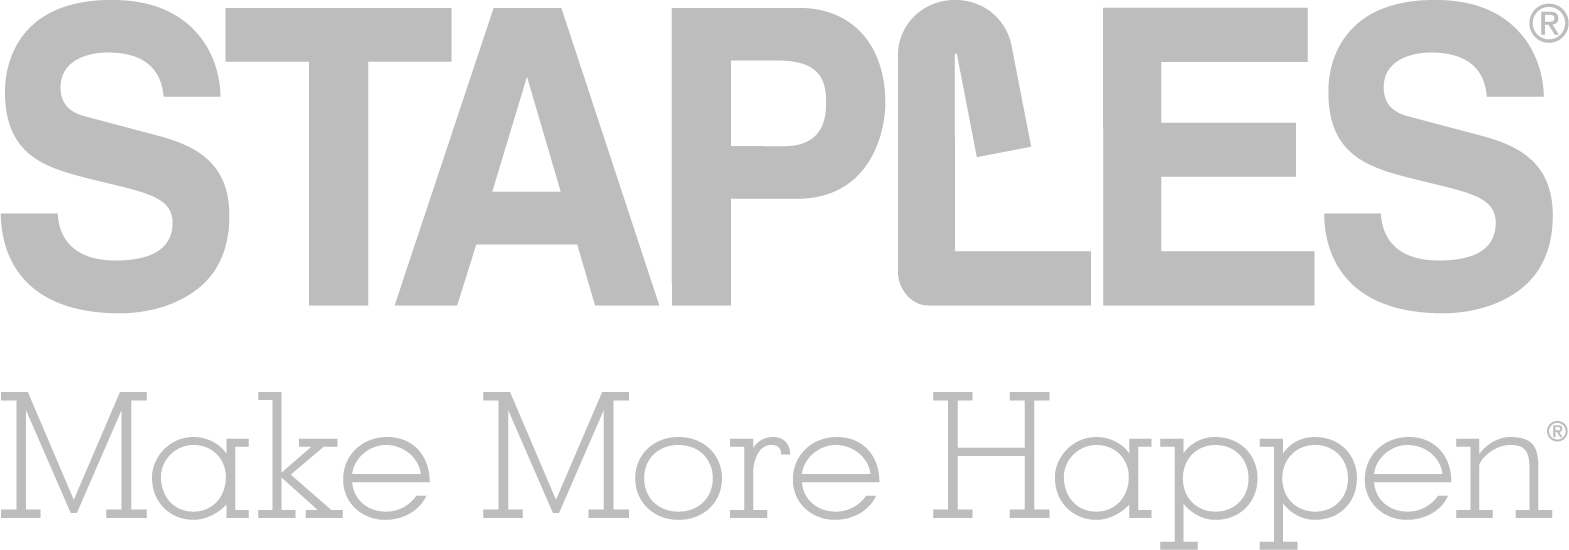 Make More Happen Staples Logo - staples-make-more-happen | Statista Content & Information Design ...